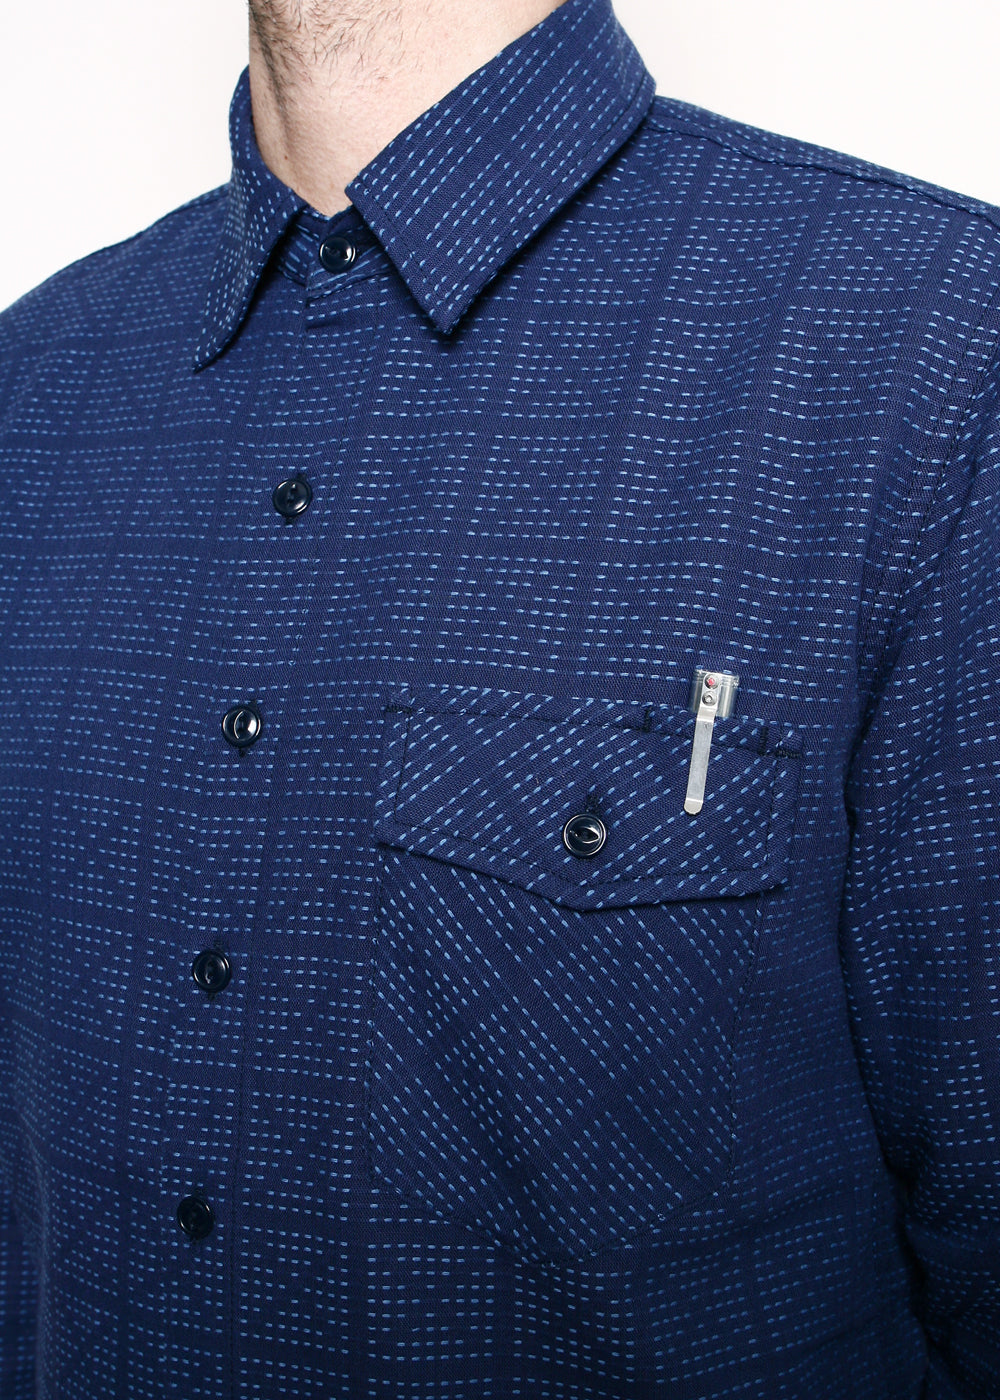 Reactive Blue Oxford Brace Workshirt by Hiroshi Kato M